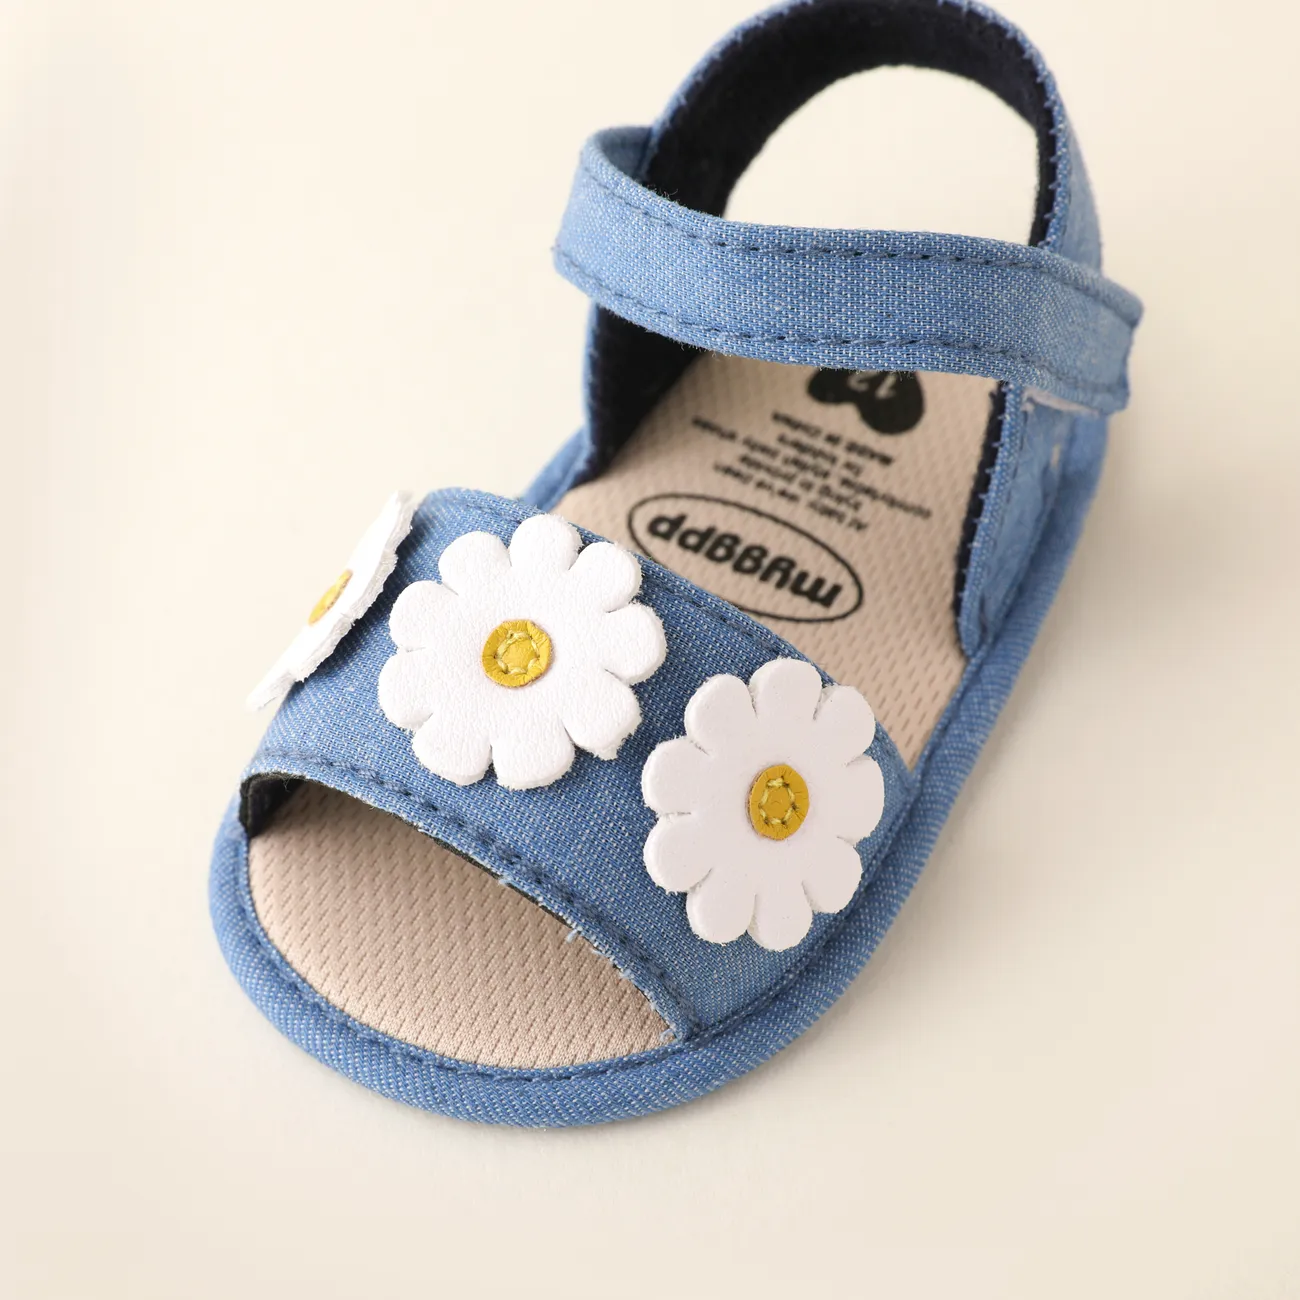 Baby/Toddler Girl Sweet Style Velcor 3D flower Decor Cloth Prewalker Shoes DENIMBLUE big image 1